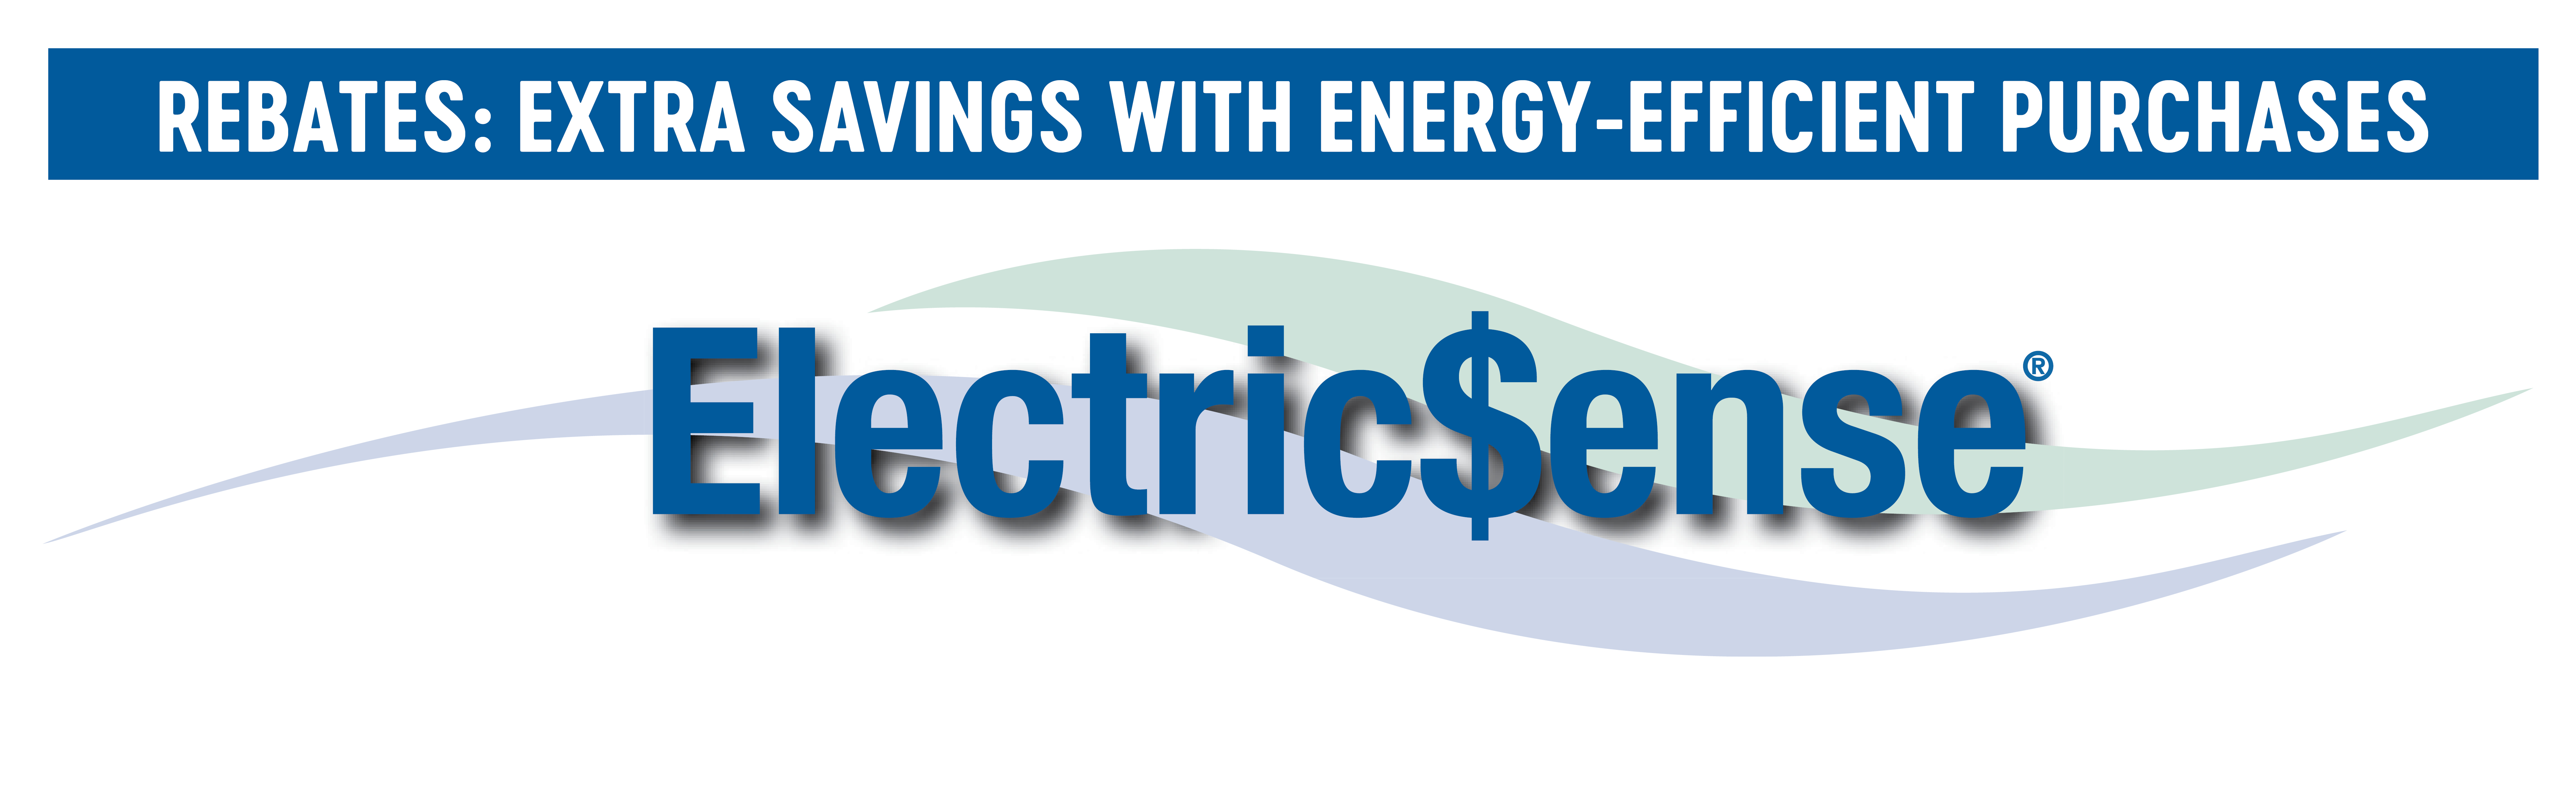 Electric$sense Rebates